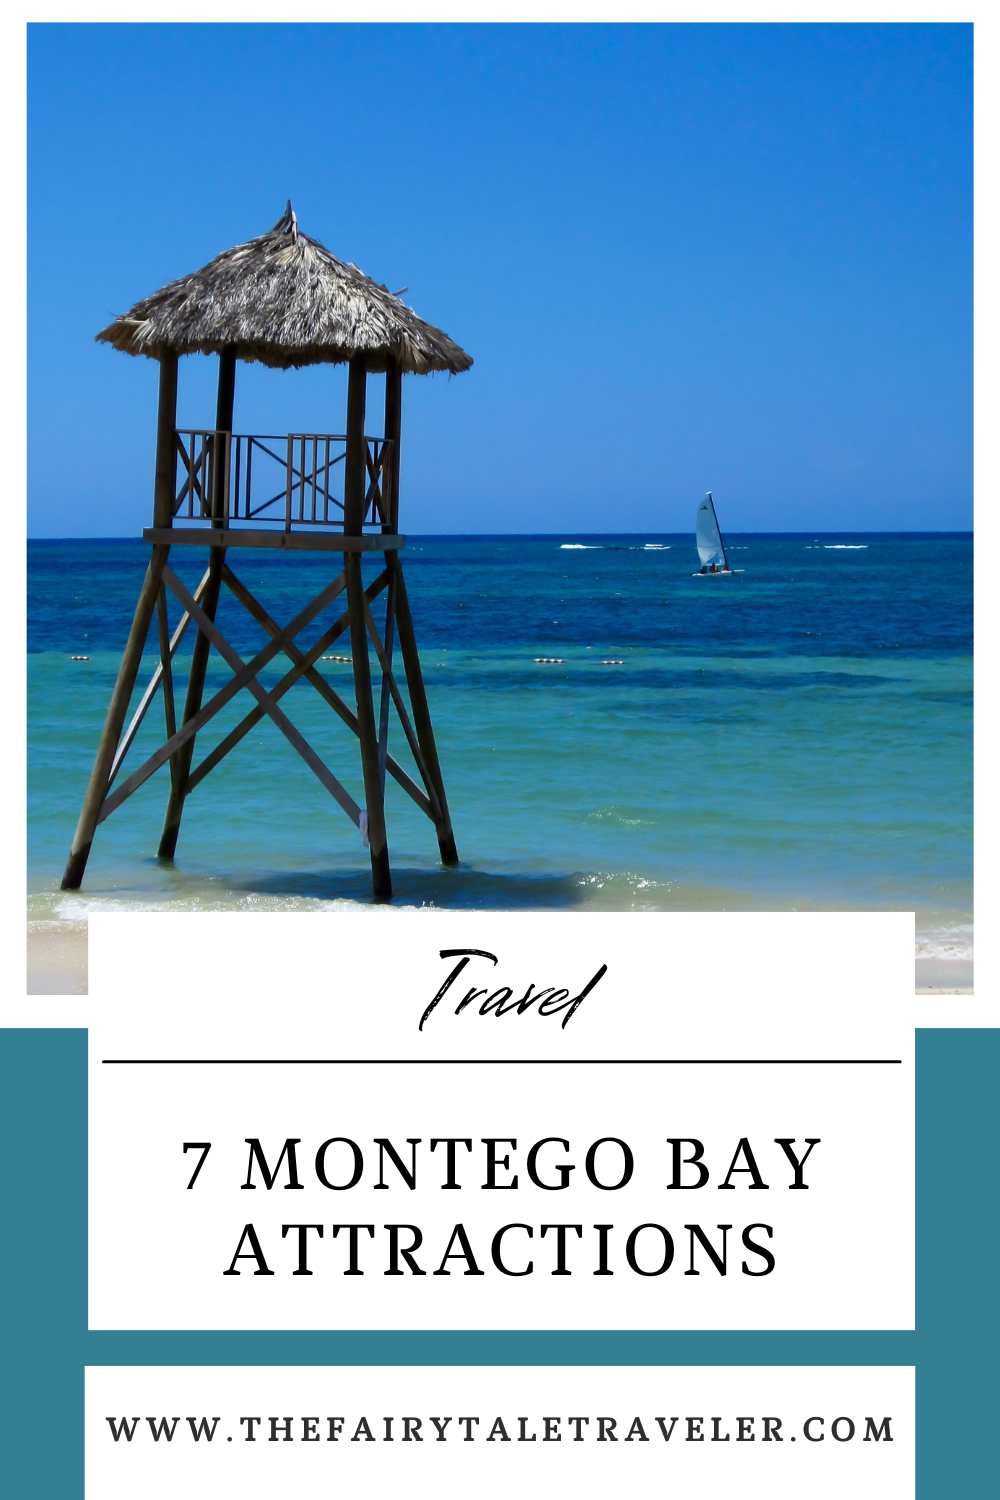 Montego Bay attractions